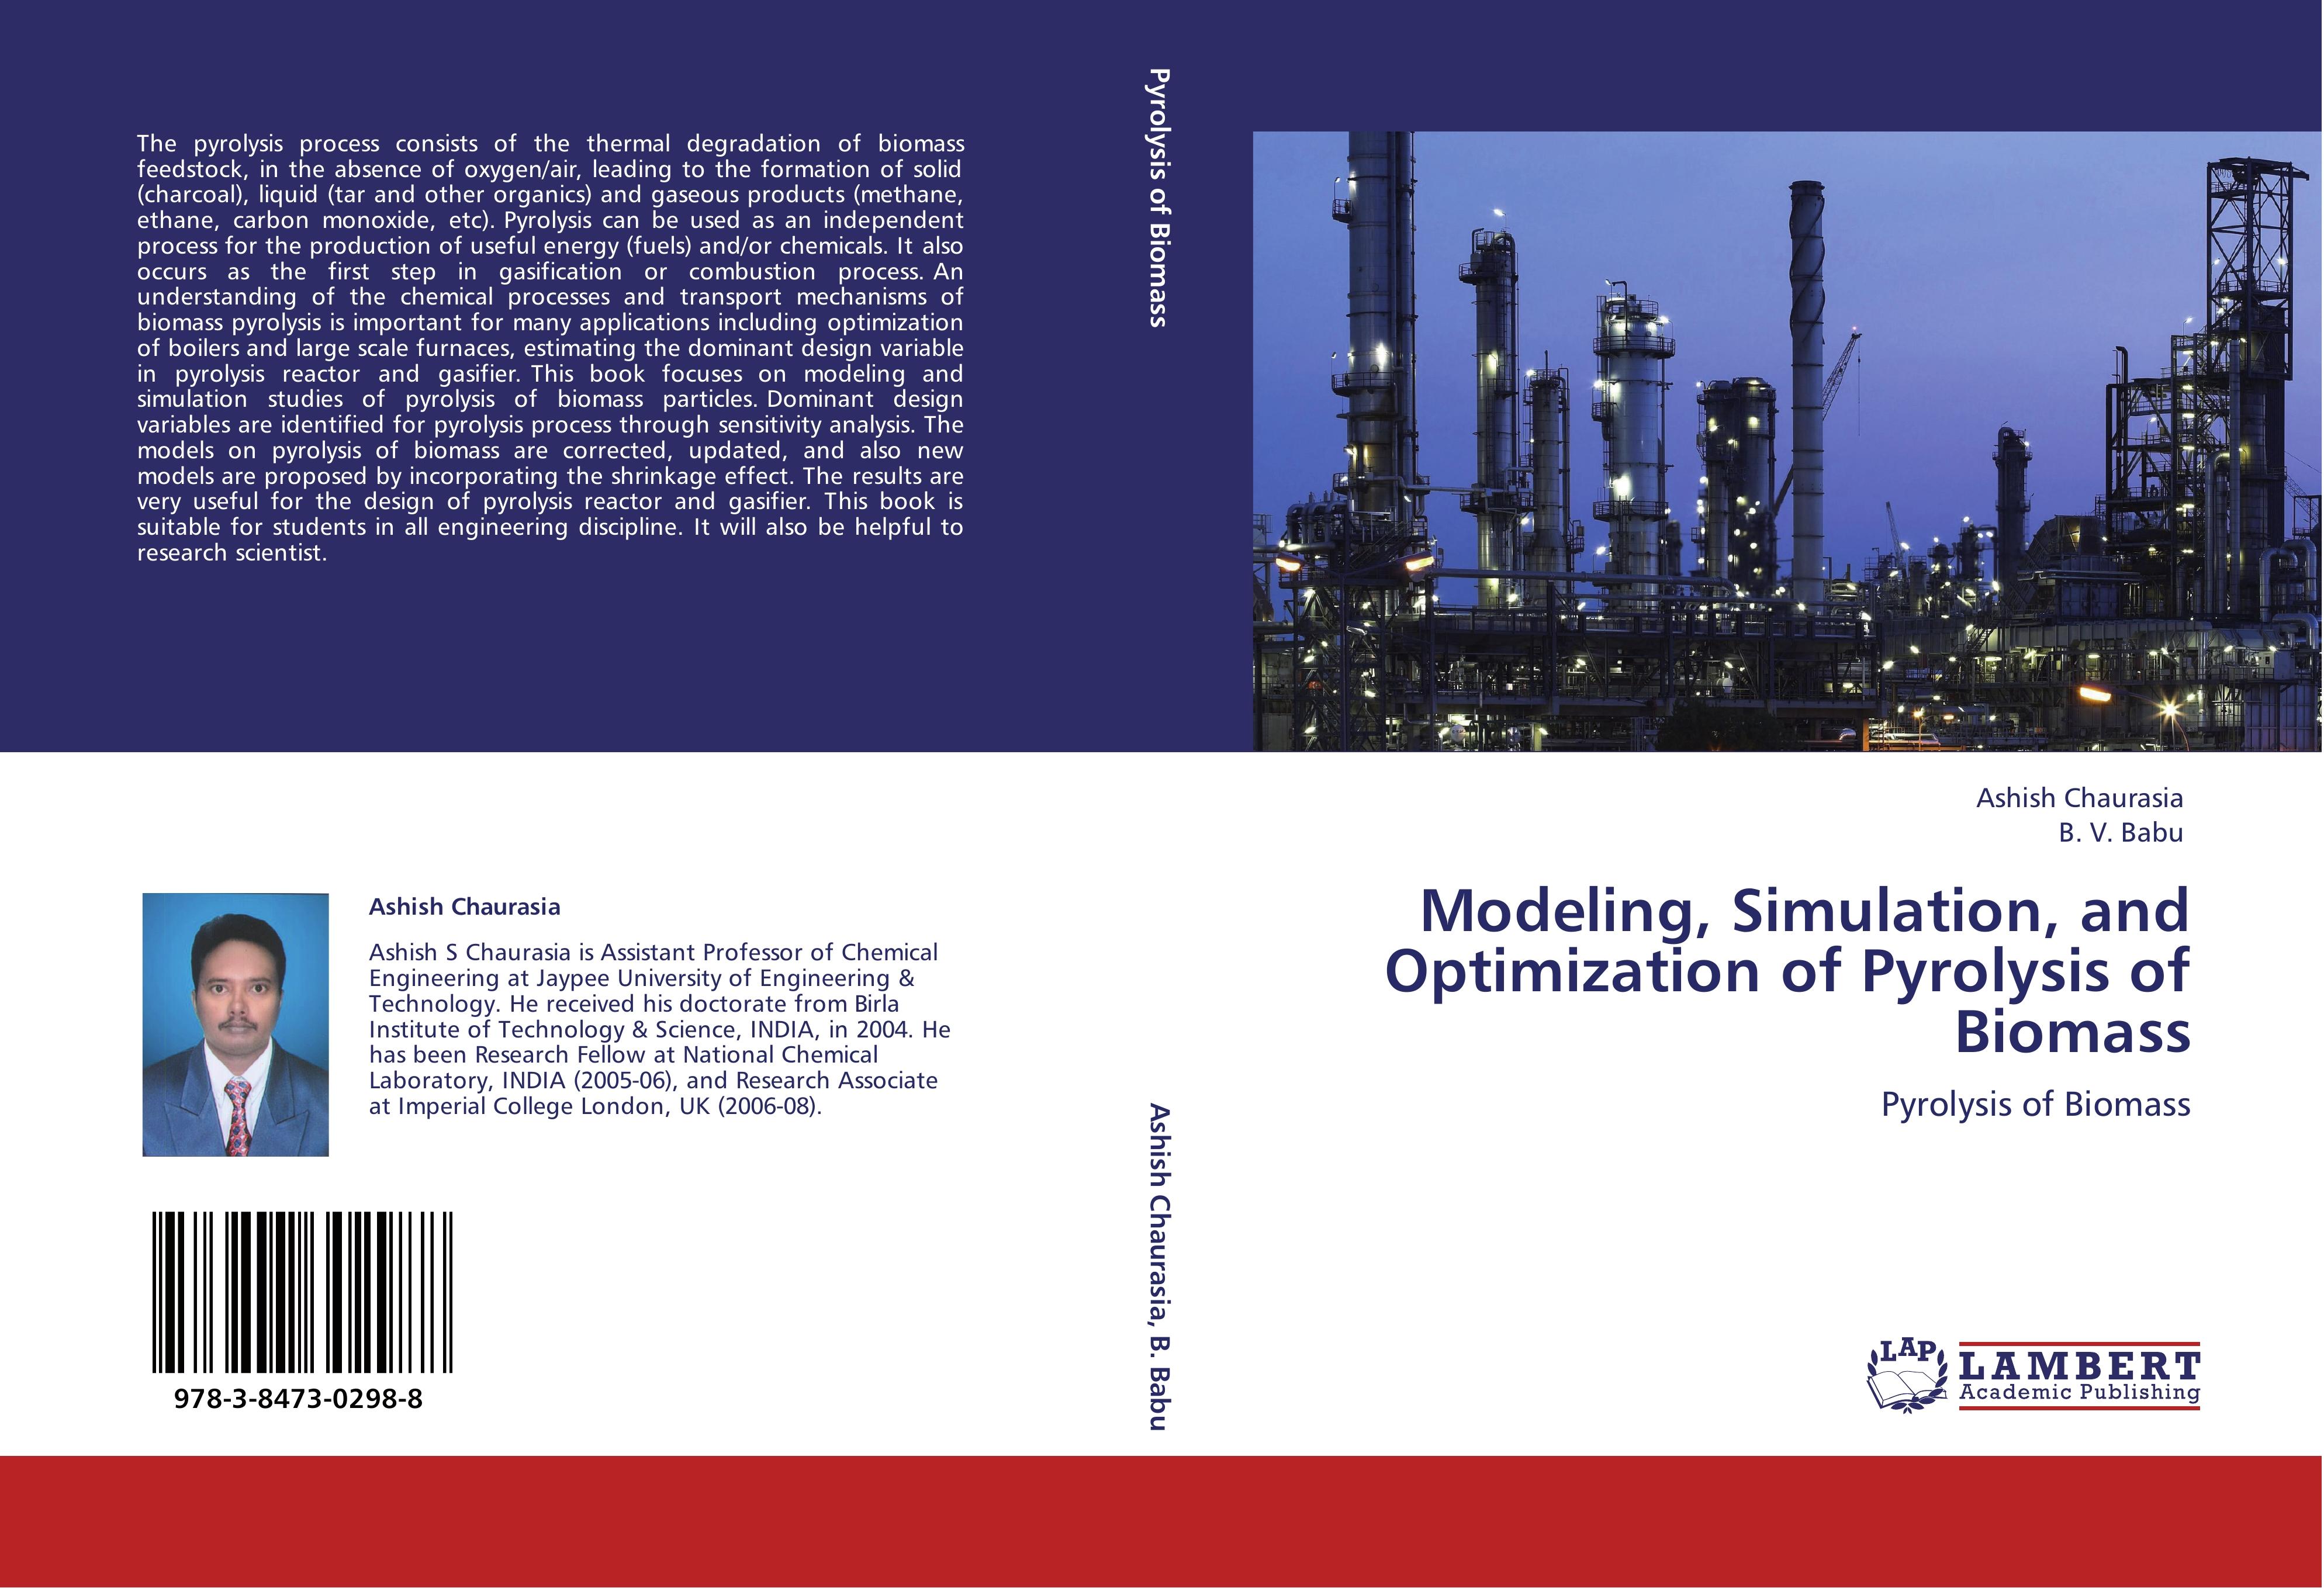 Modeling, Simulation, and Optimization of Pyrolysis of Biomass - ASHISH CHAURASIA B. V. Babu